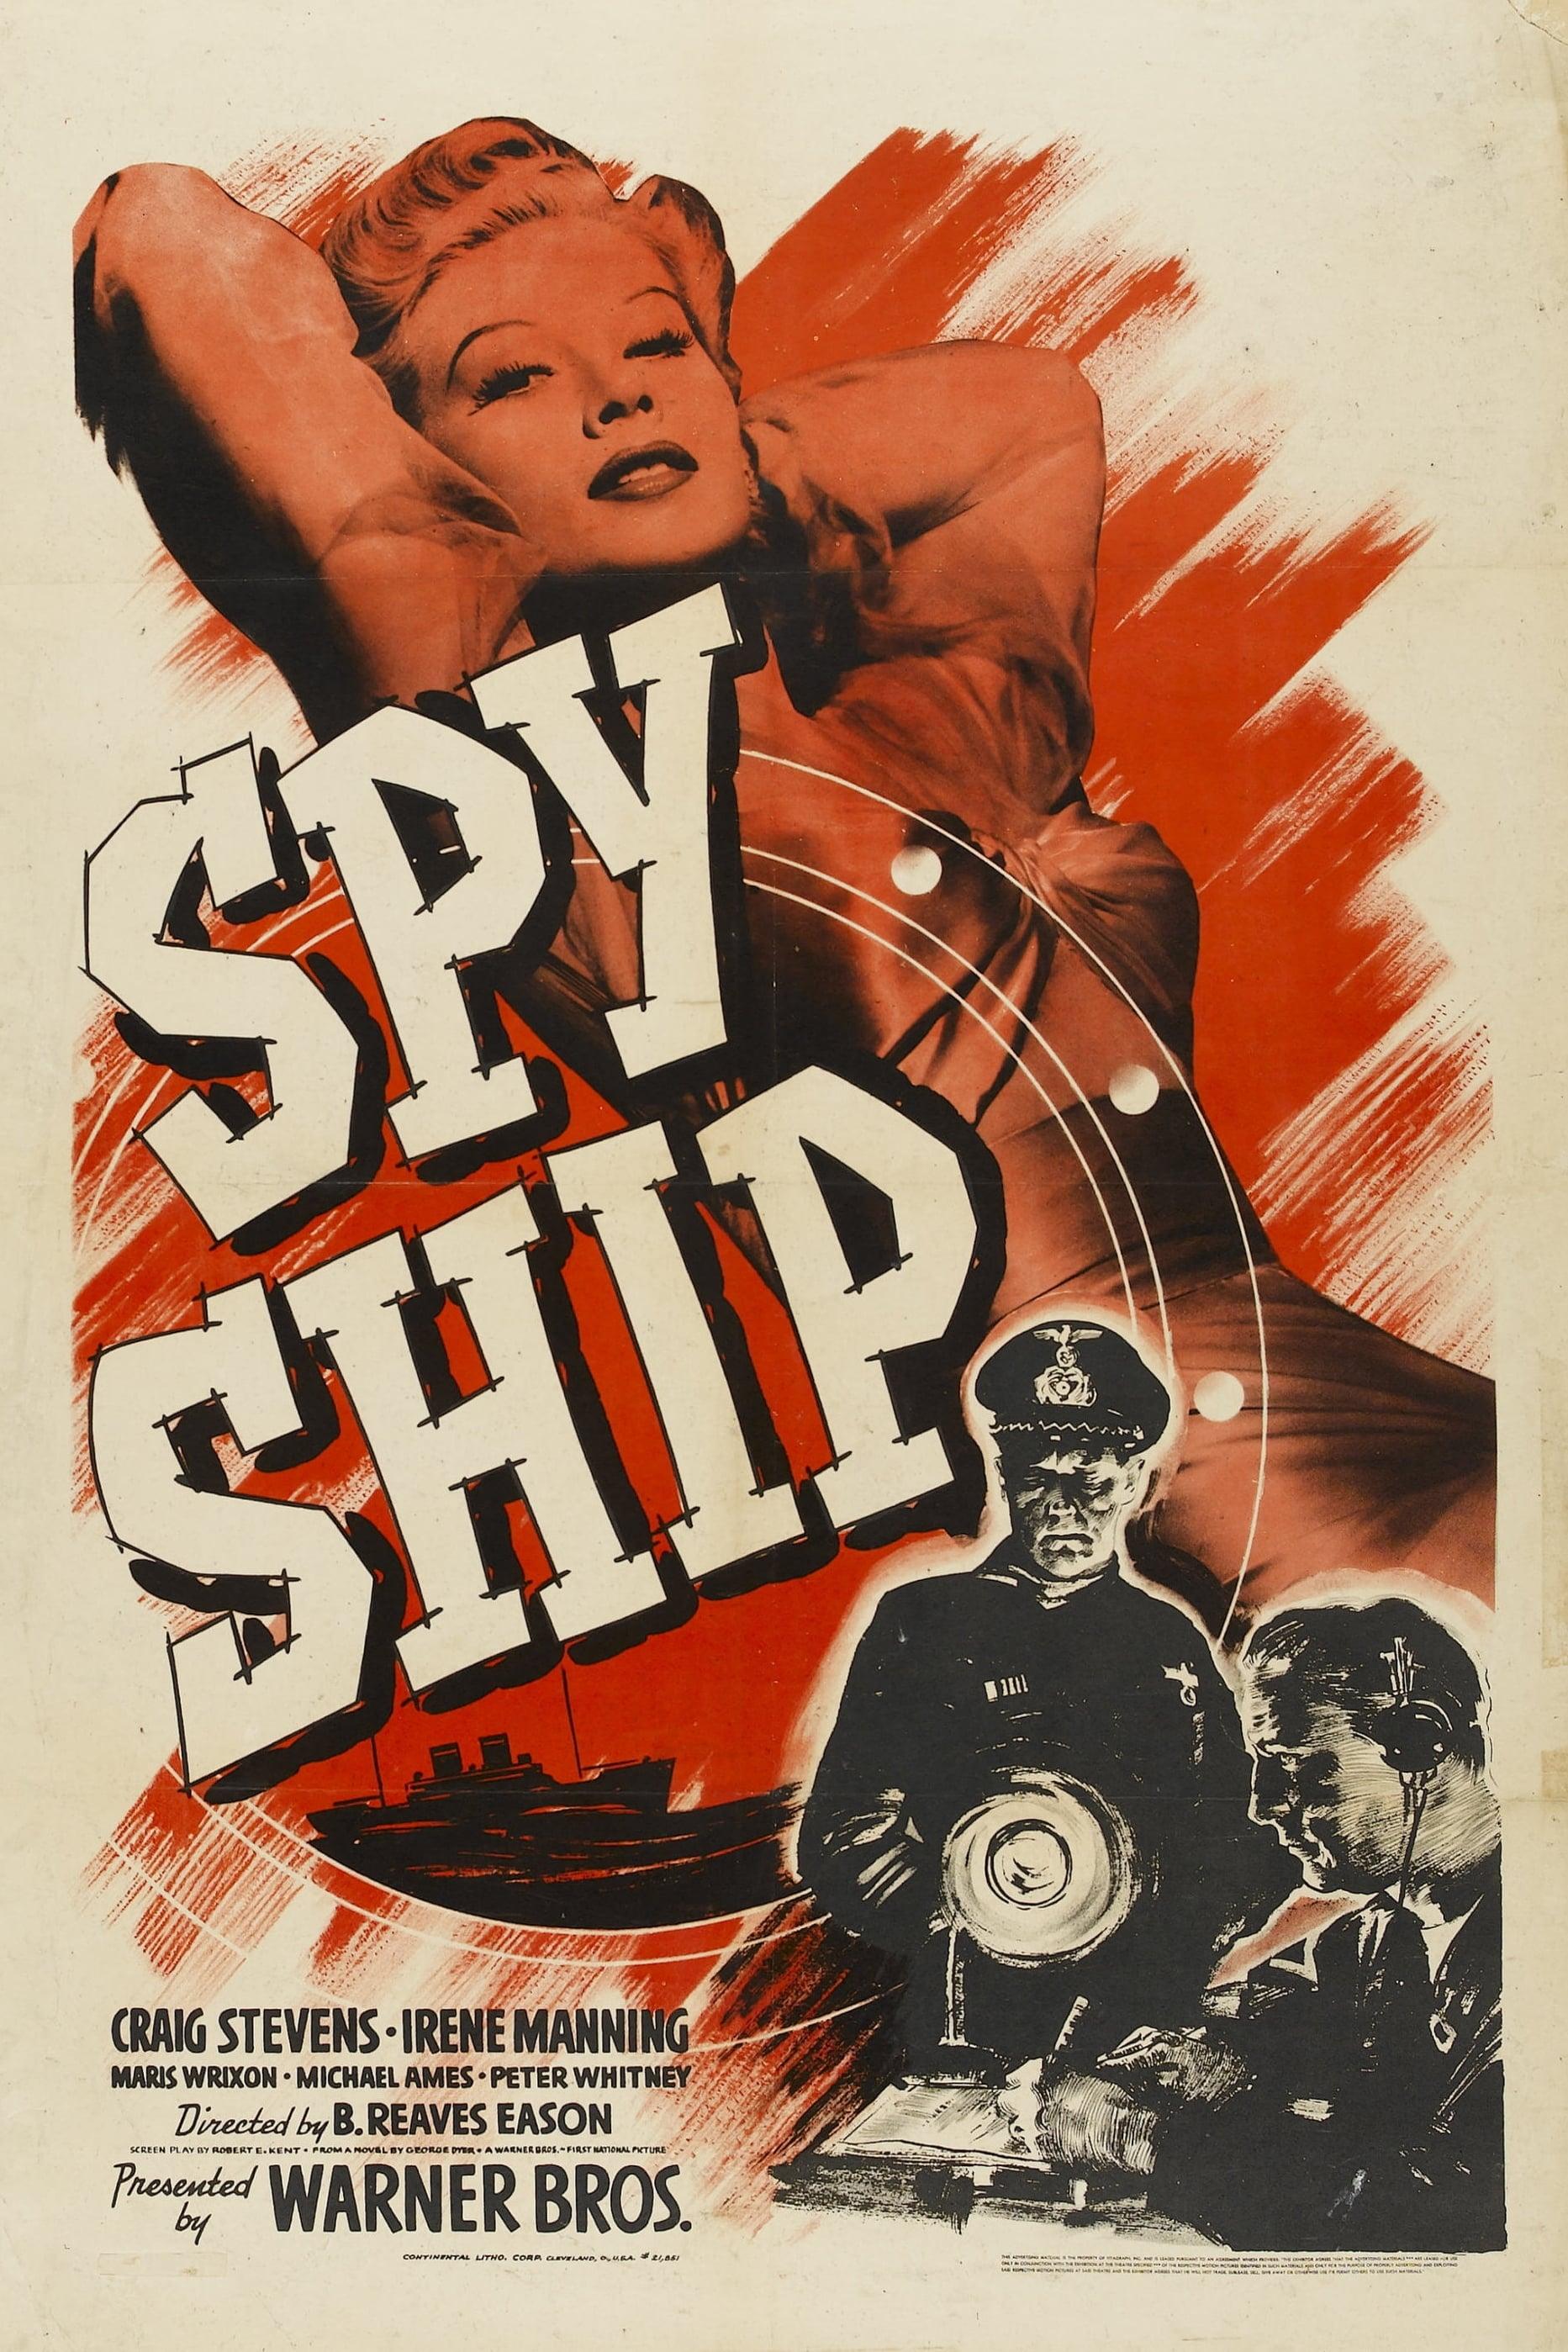 Spy Ship poster